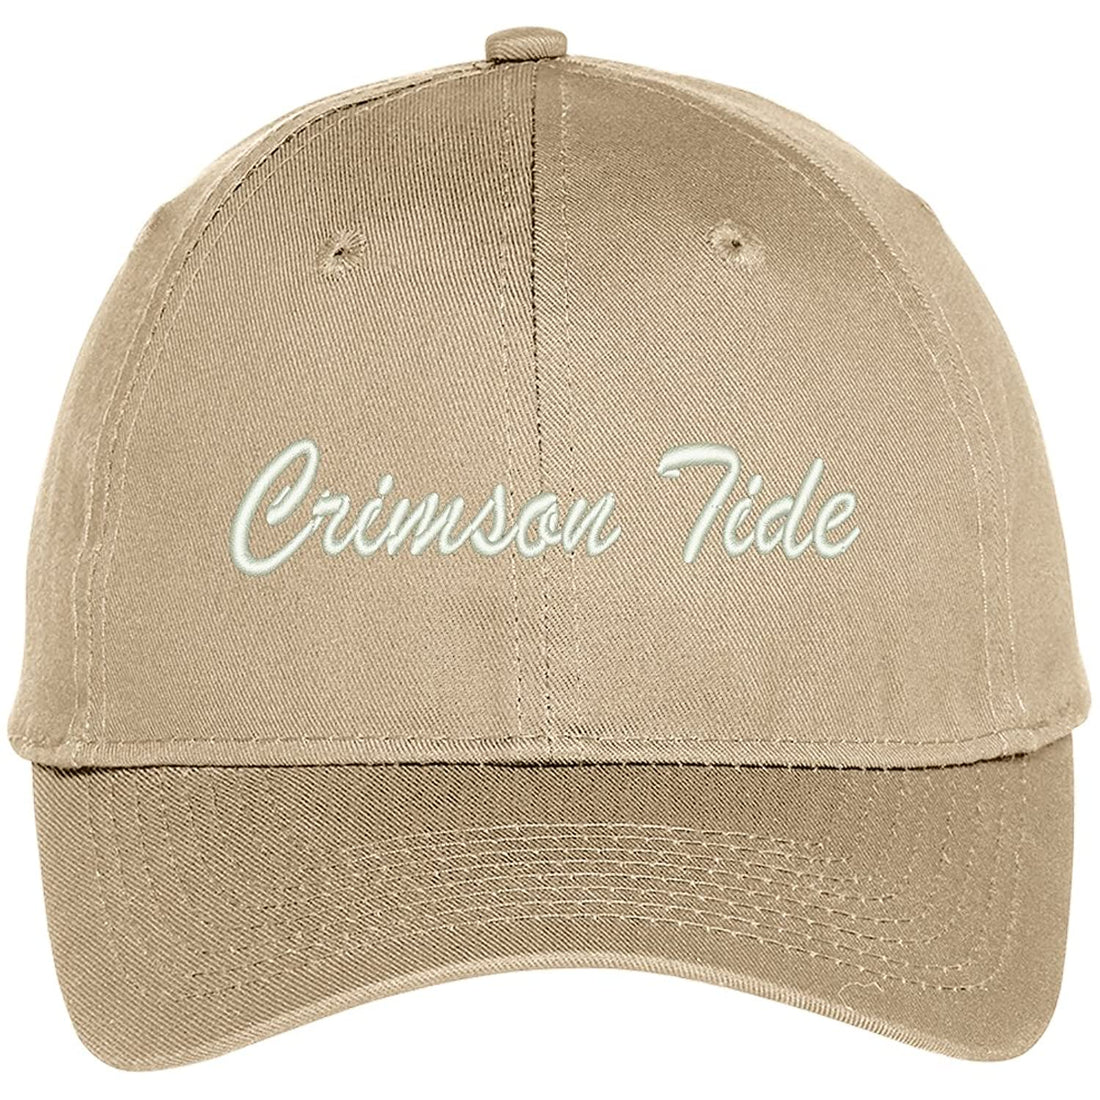 Trendy Apparel Shop Crimson Tide Embroidered Team Nickname Mascot Cap